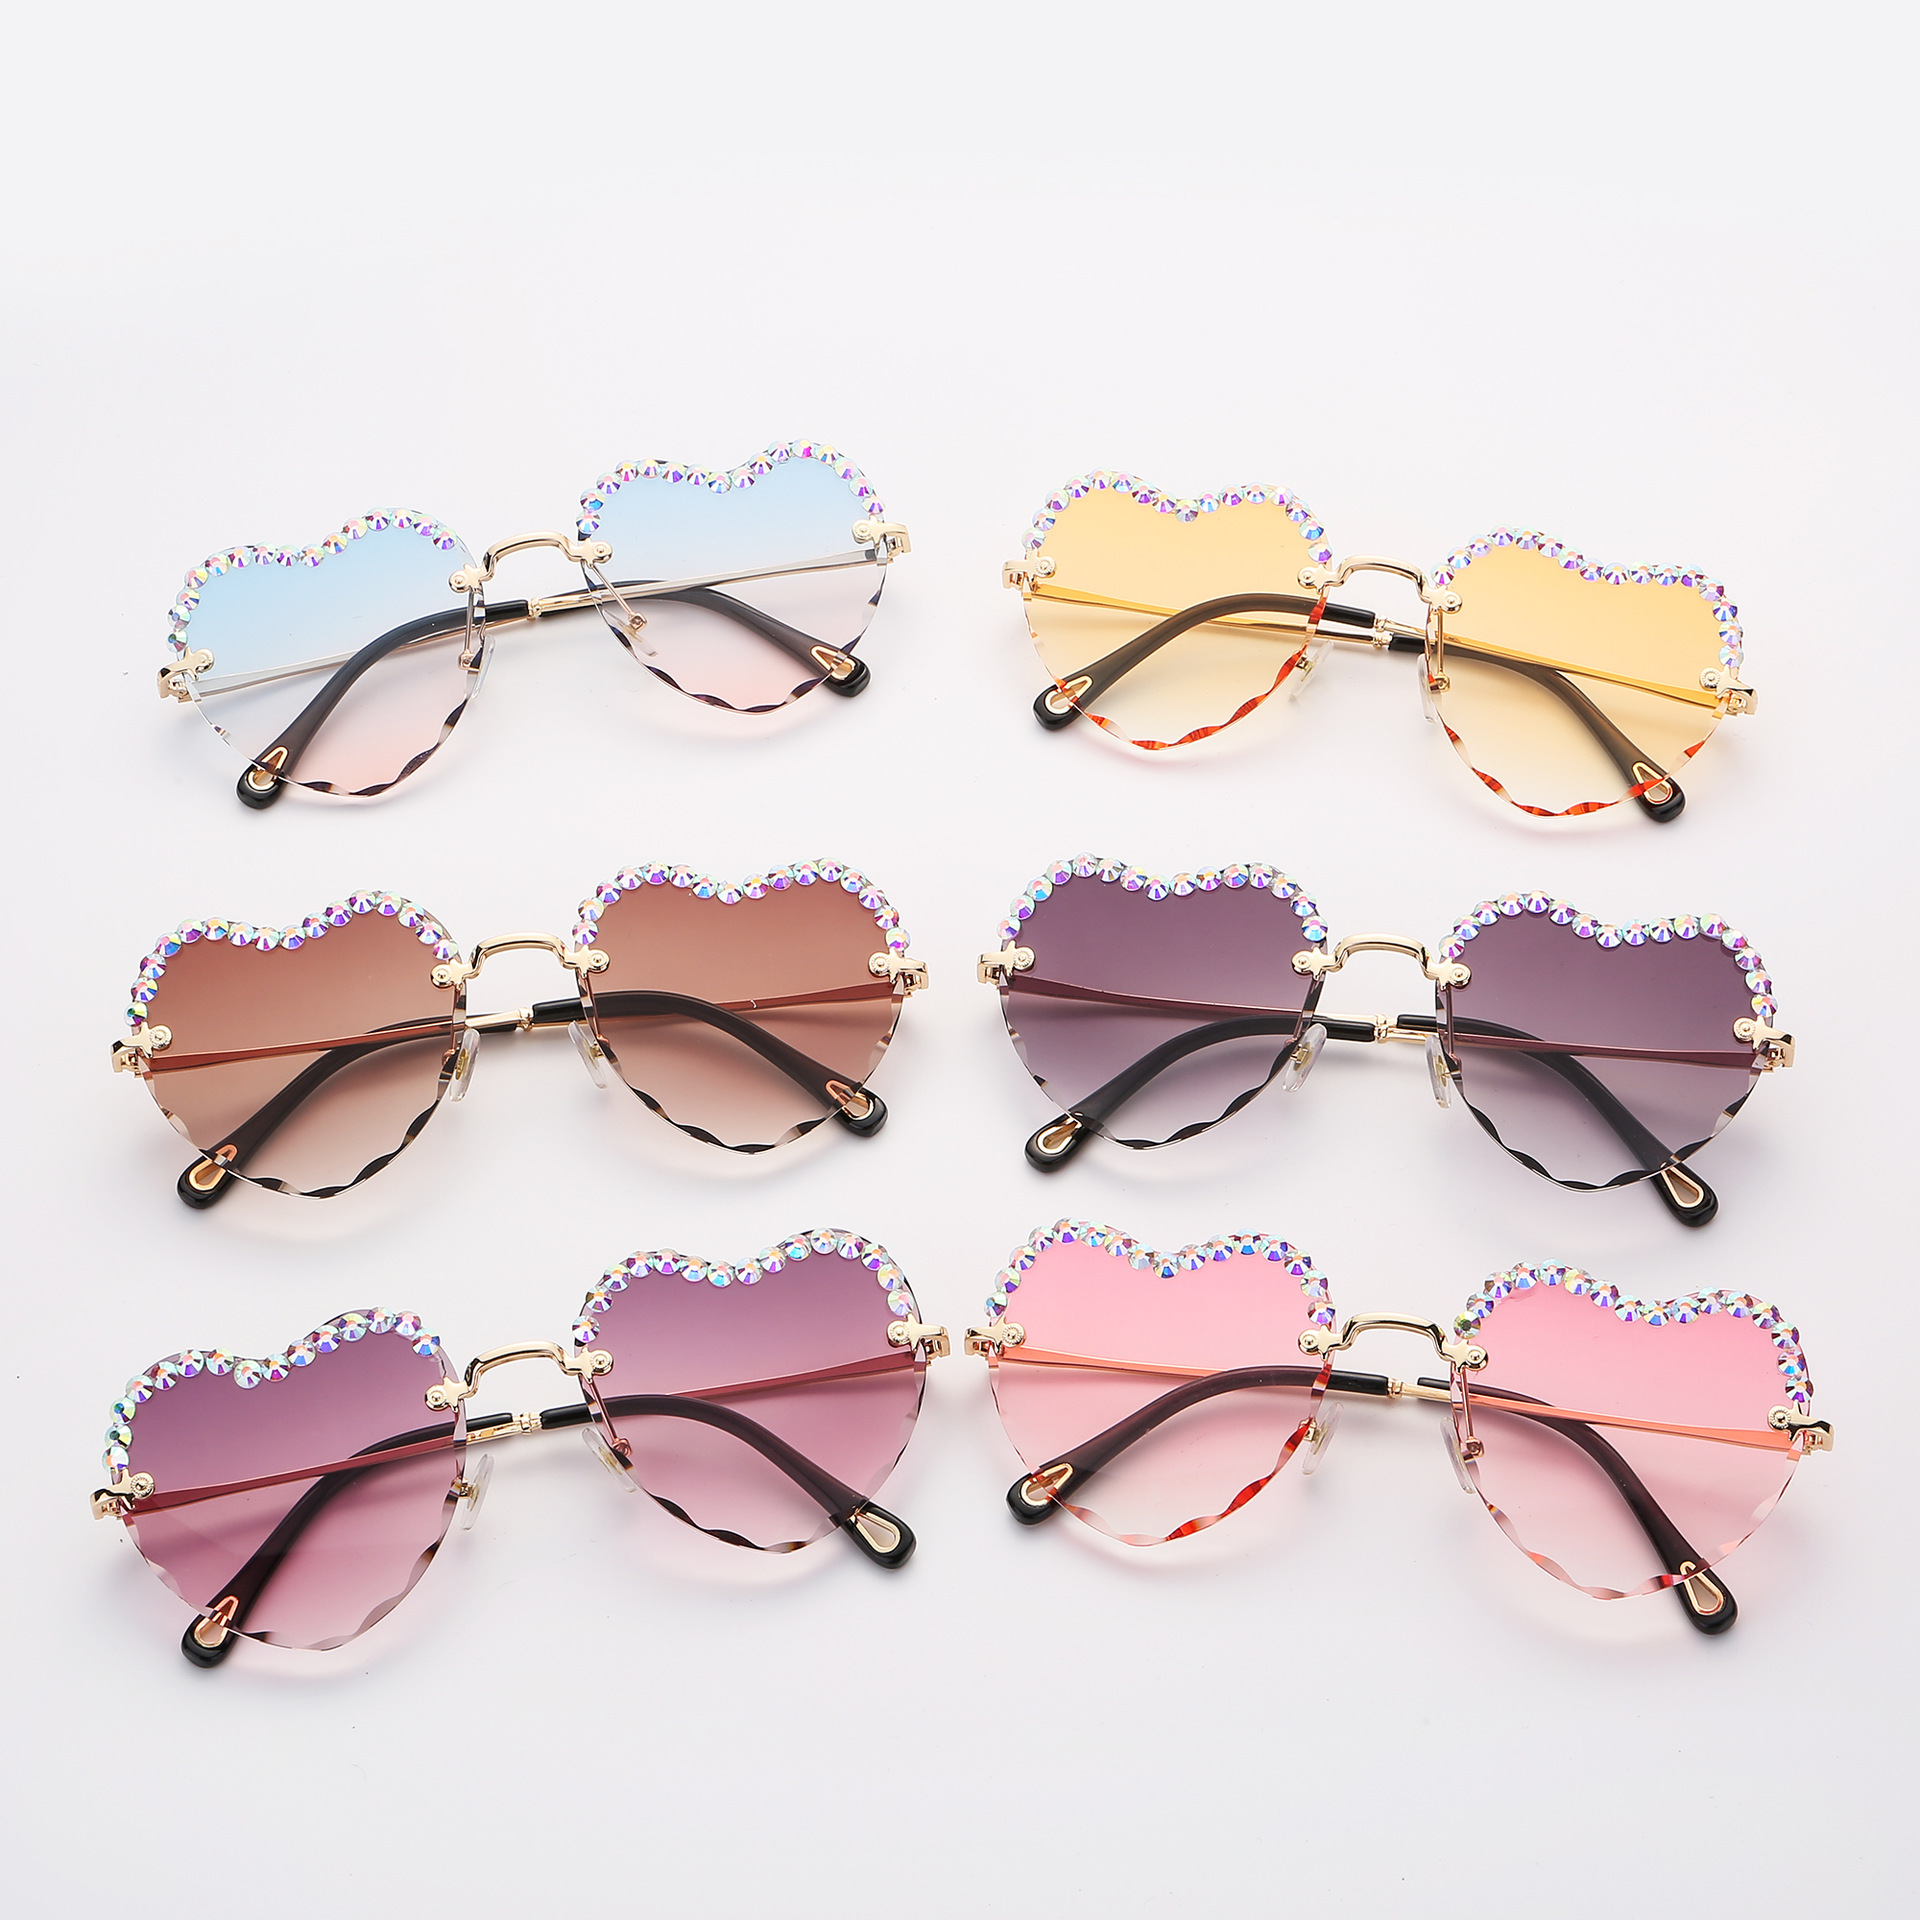 Ycnychchy Women's Diamond Studded Sunglasses